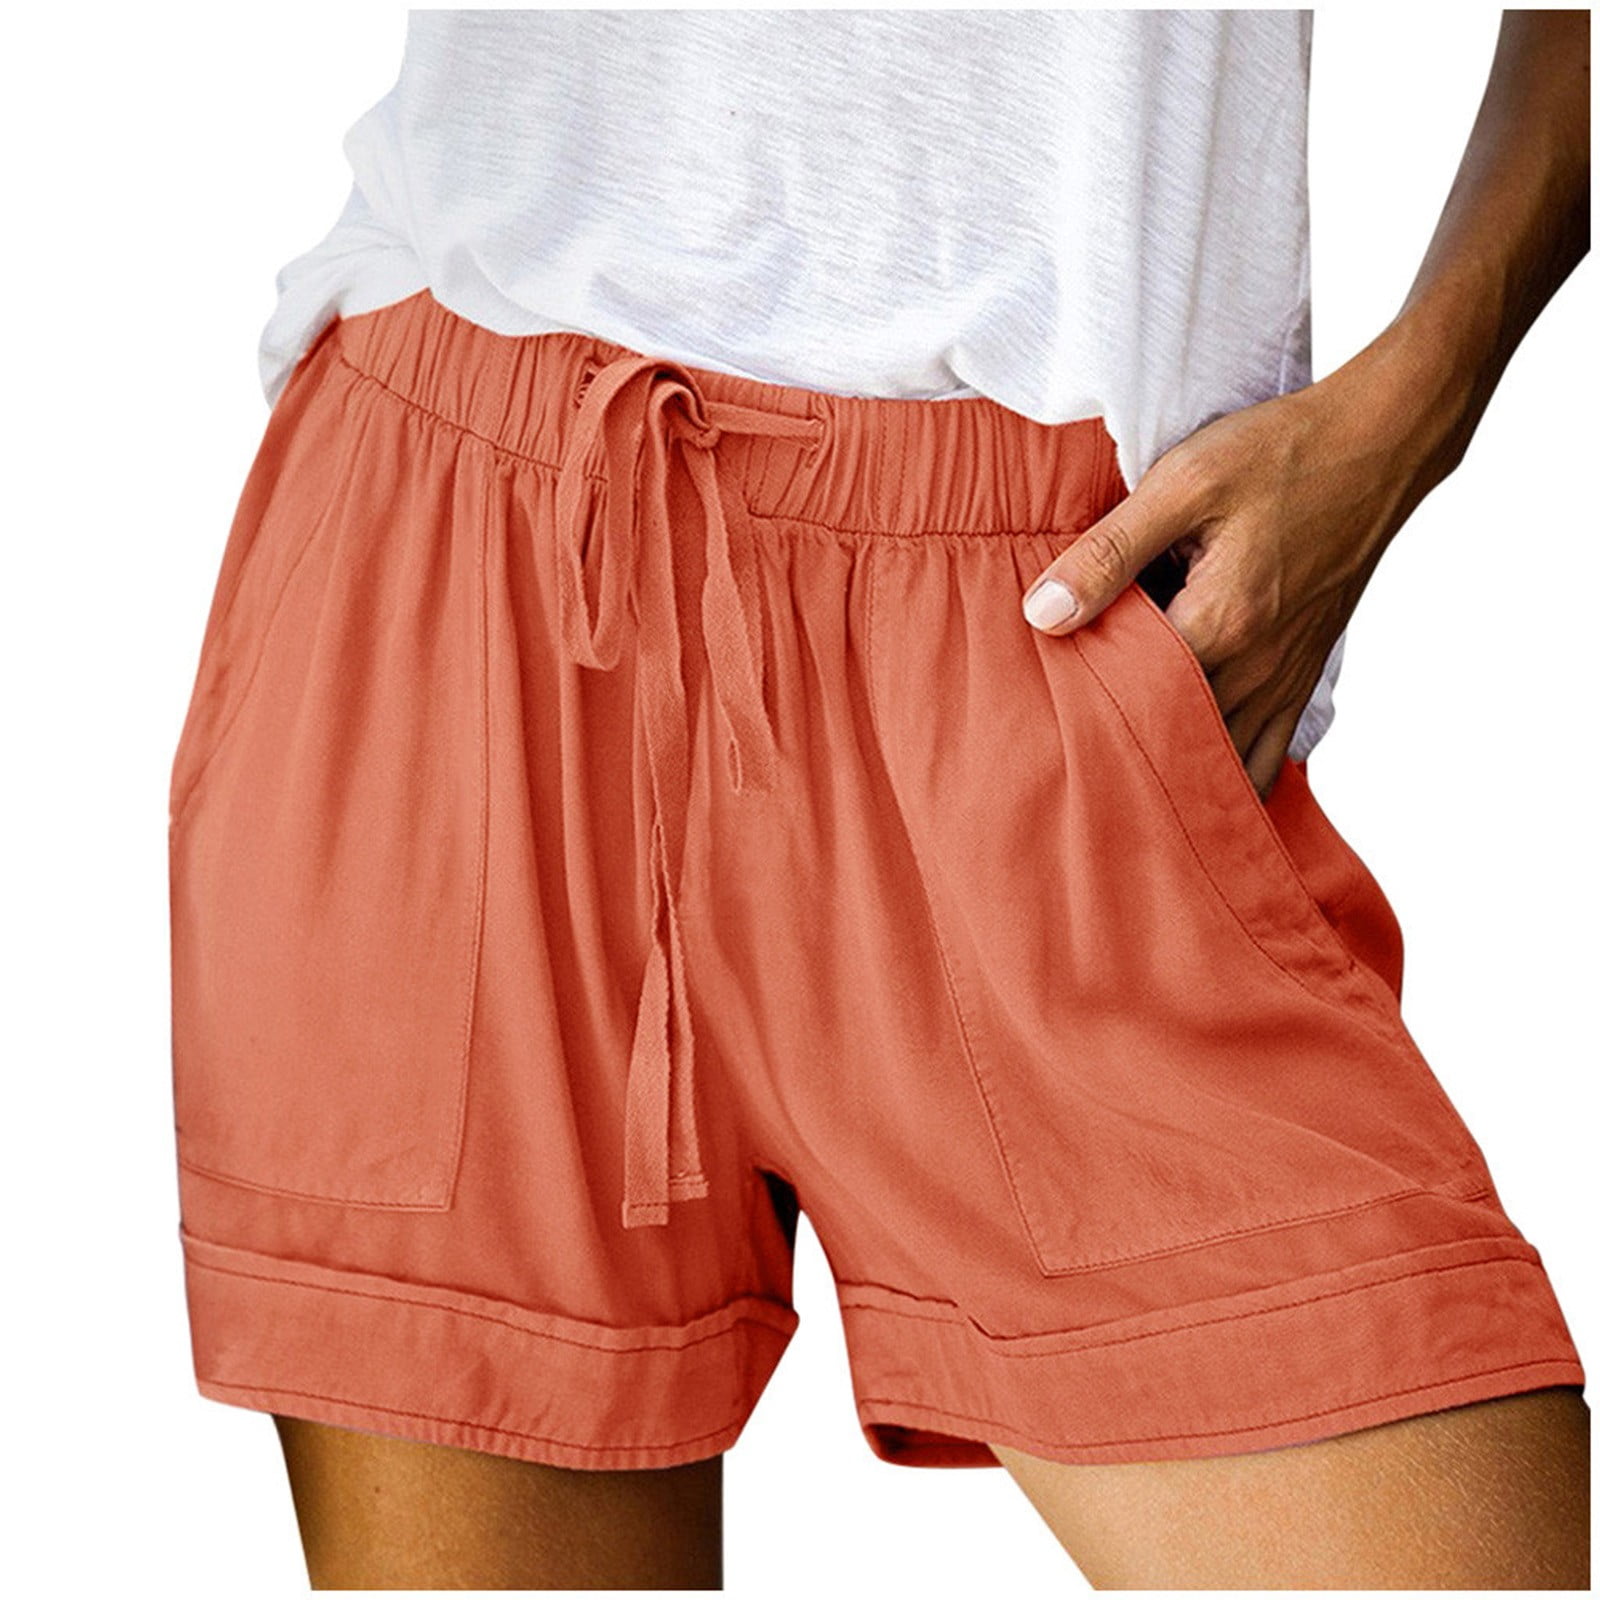 Women's Plus Size Shorts Wide Leg Cotton Linen Comfy Pocketed Pants Plus Size Roll Board Shorts Beach Shorts - Walmart.com